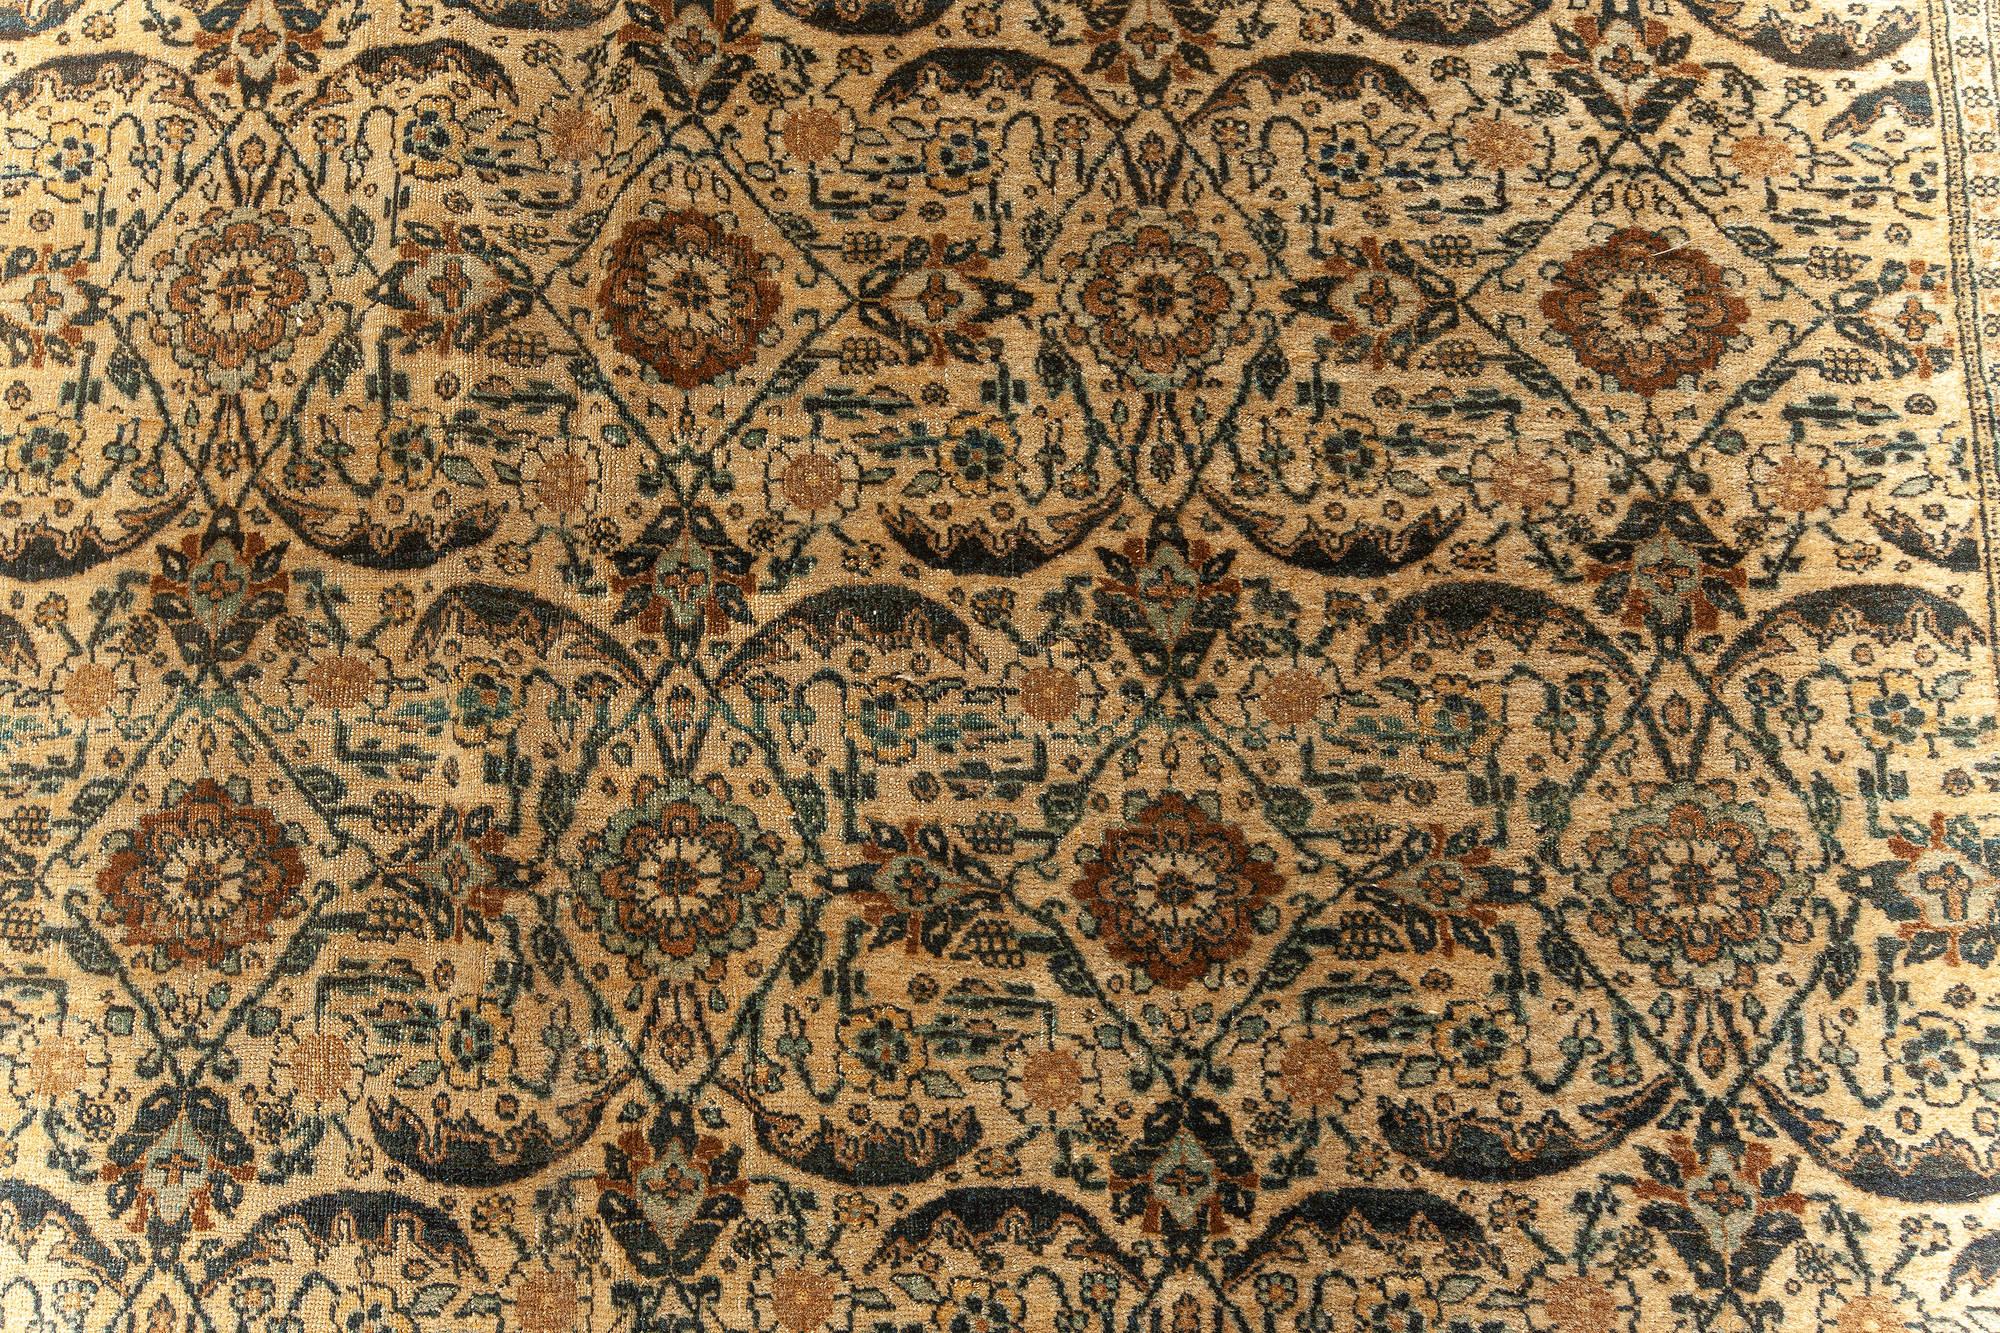 Authentic 19th Century Persian Tabriz Handmade Wool Carpet
Size: 11'0